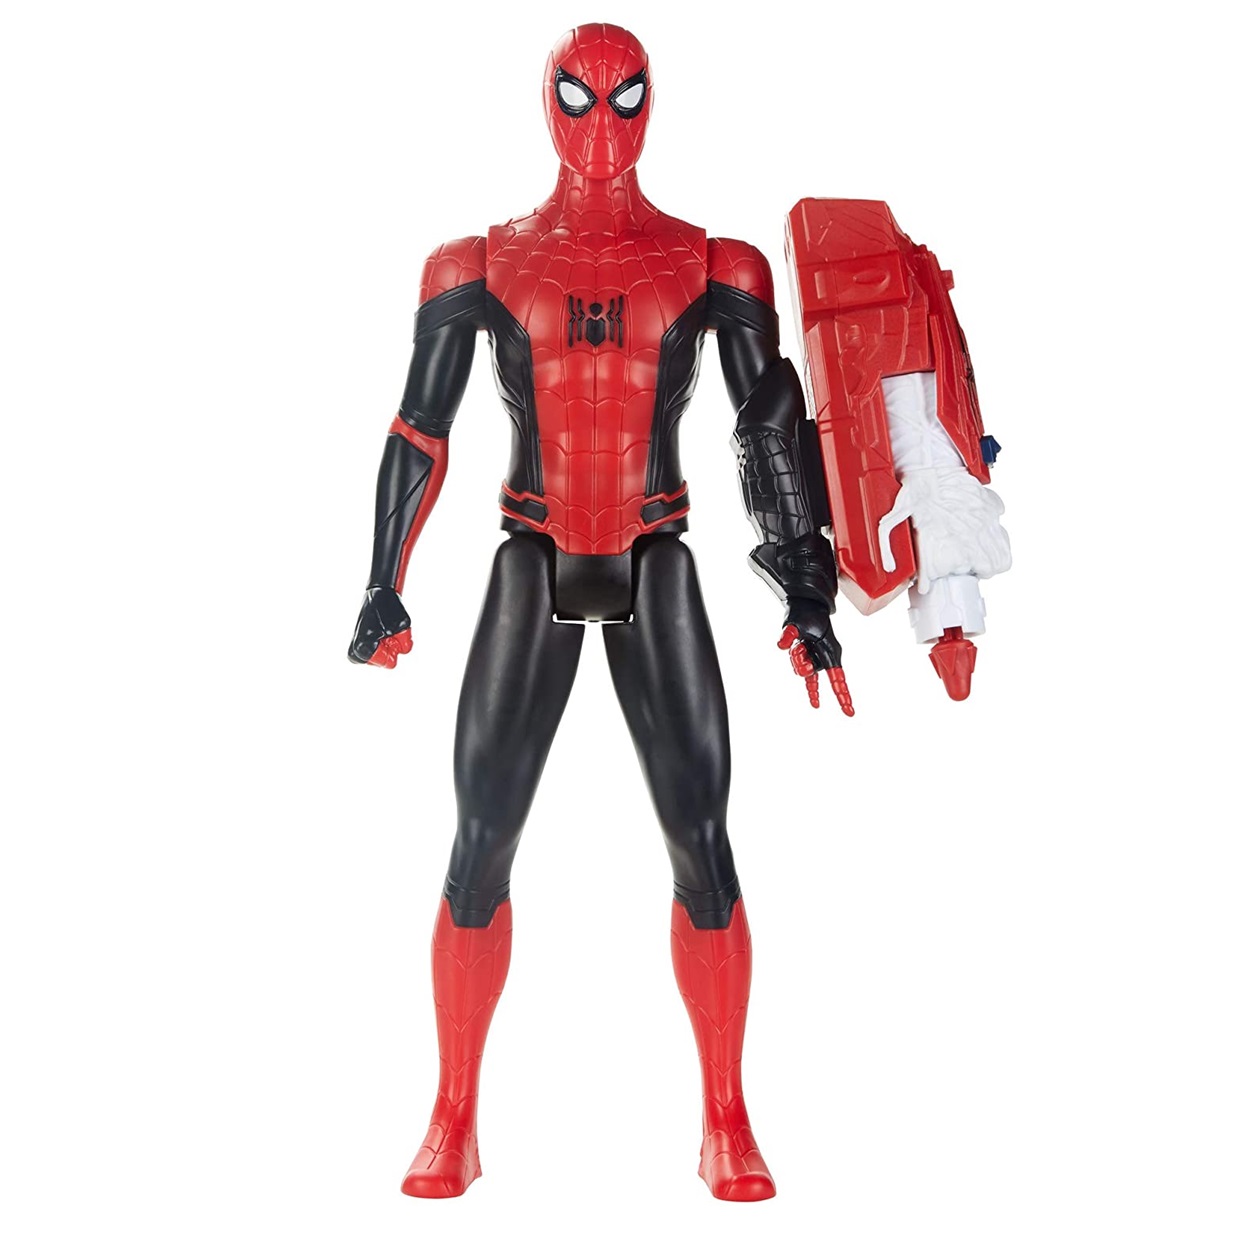 Spider Man Figura Far From Home Titan Hero Series 